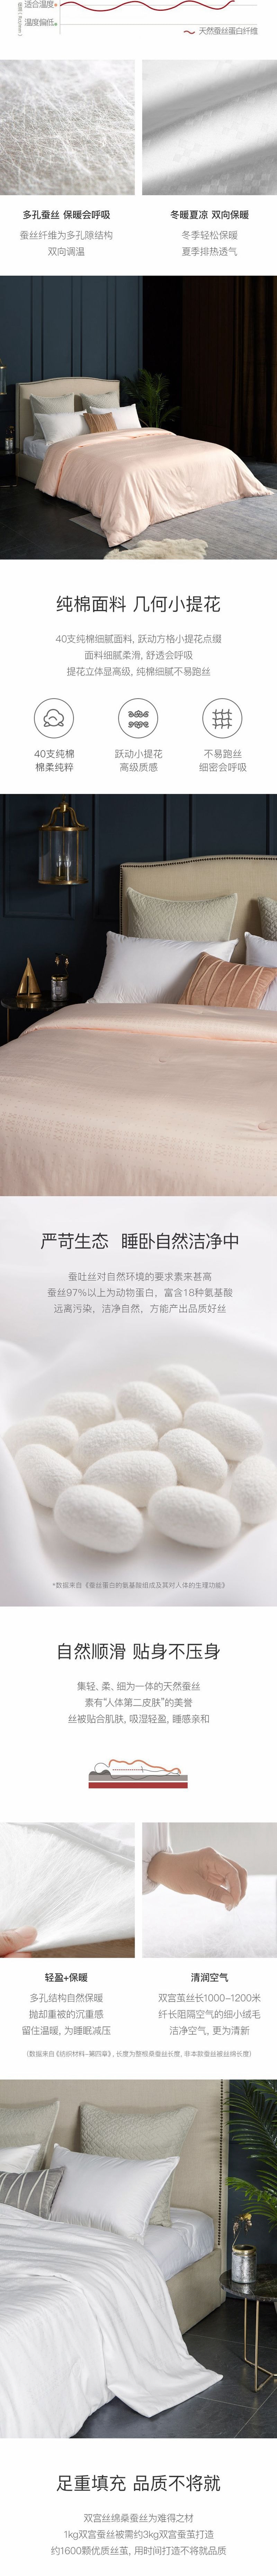 Mulberry Silk Comforter Anti-mite  220*240cm 0.5kg White [5-7 Days U.S. Shipping]